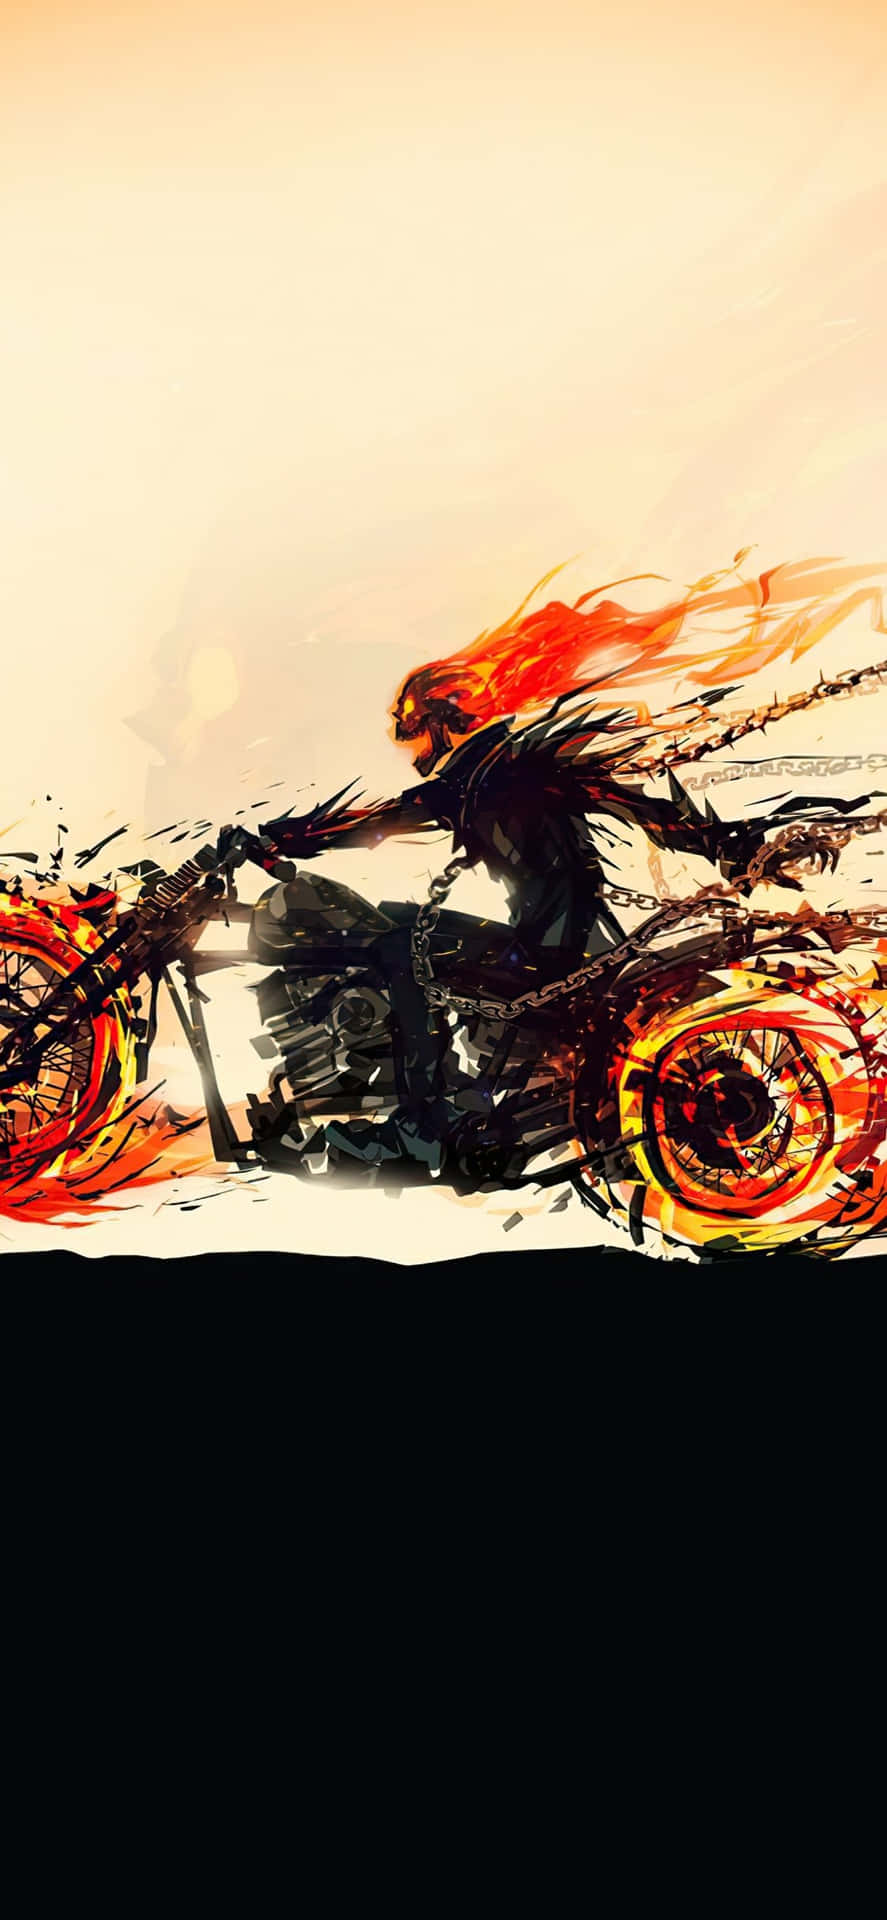 Ghost Rider, the Spirit of Vengeance